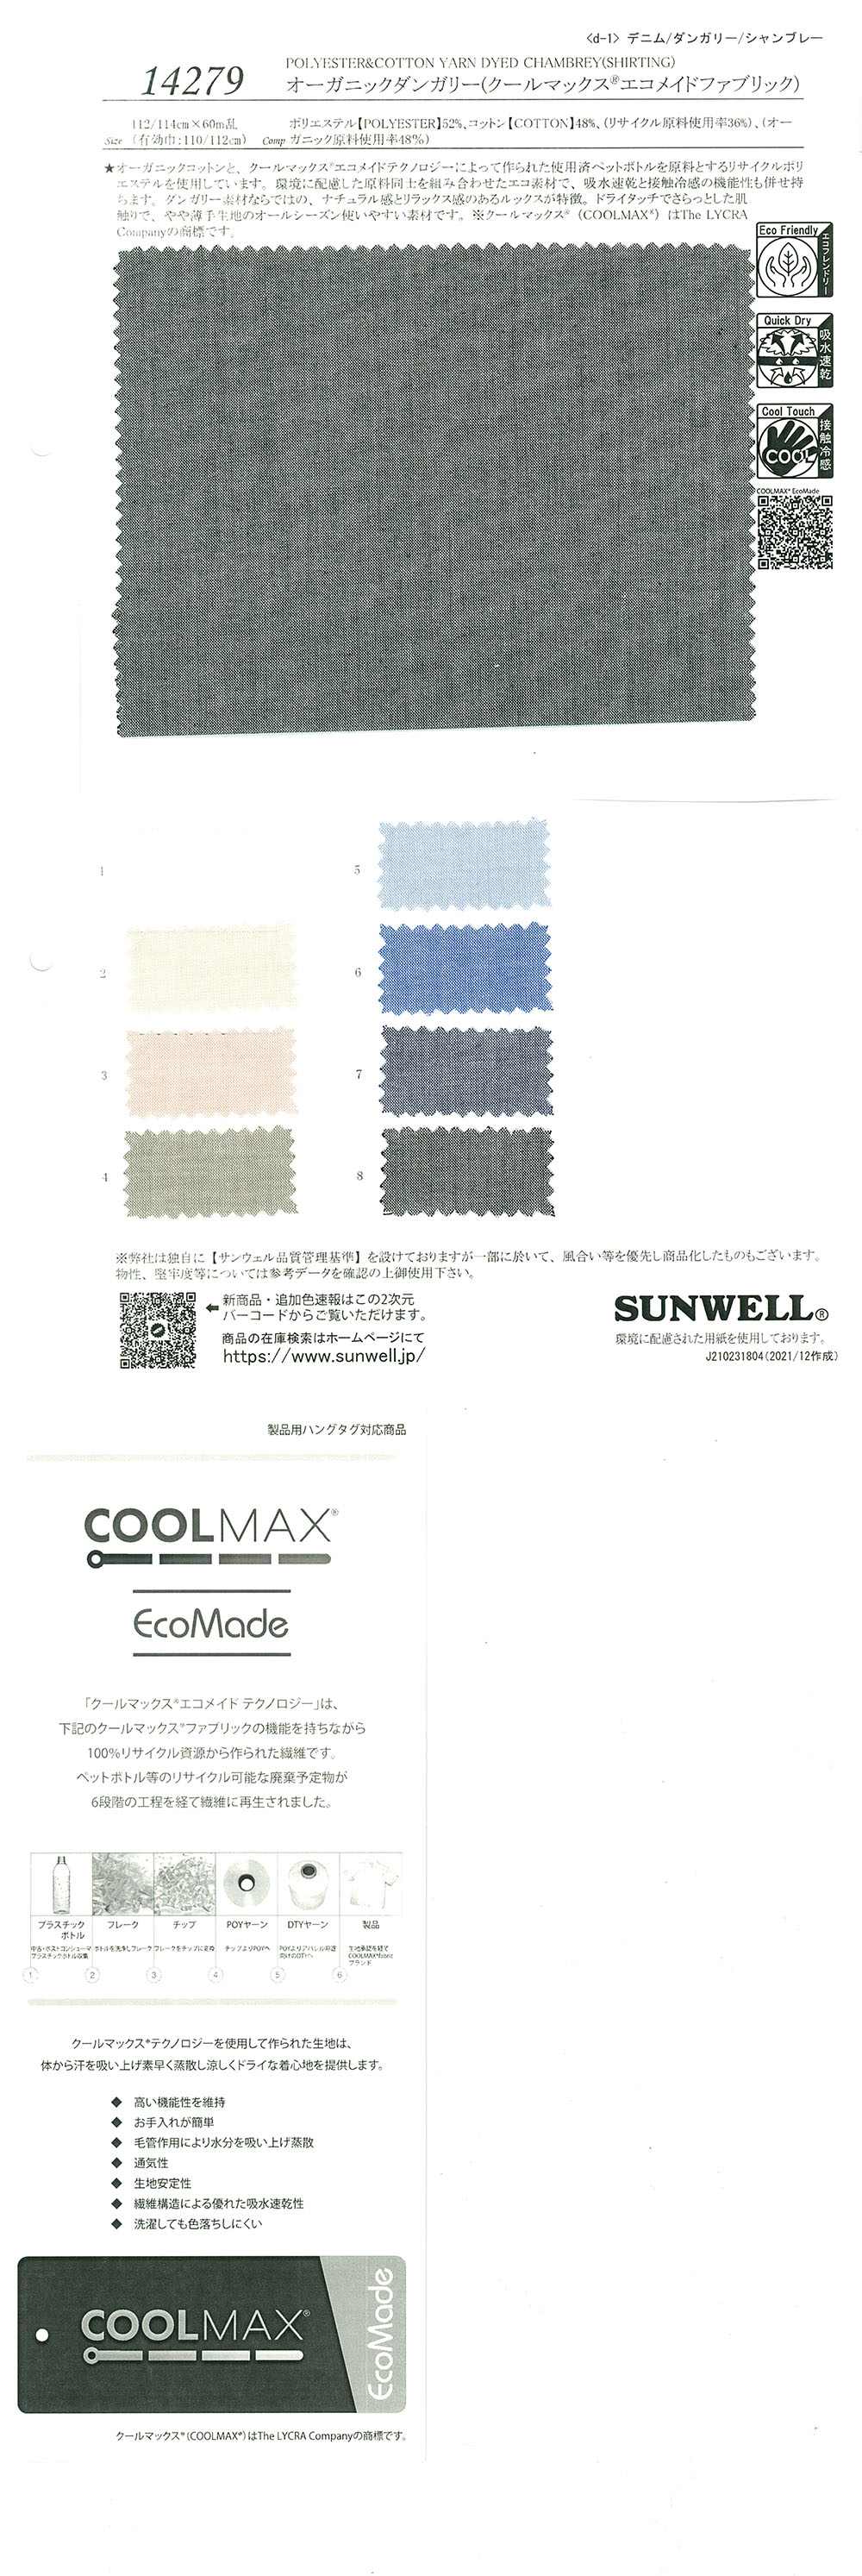 14279 Organic Dungaree(Coolmax(R) Ecomade Fabric)[Textile / Fabric] SUNWELL